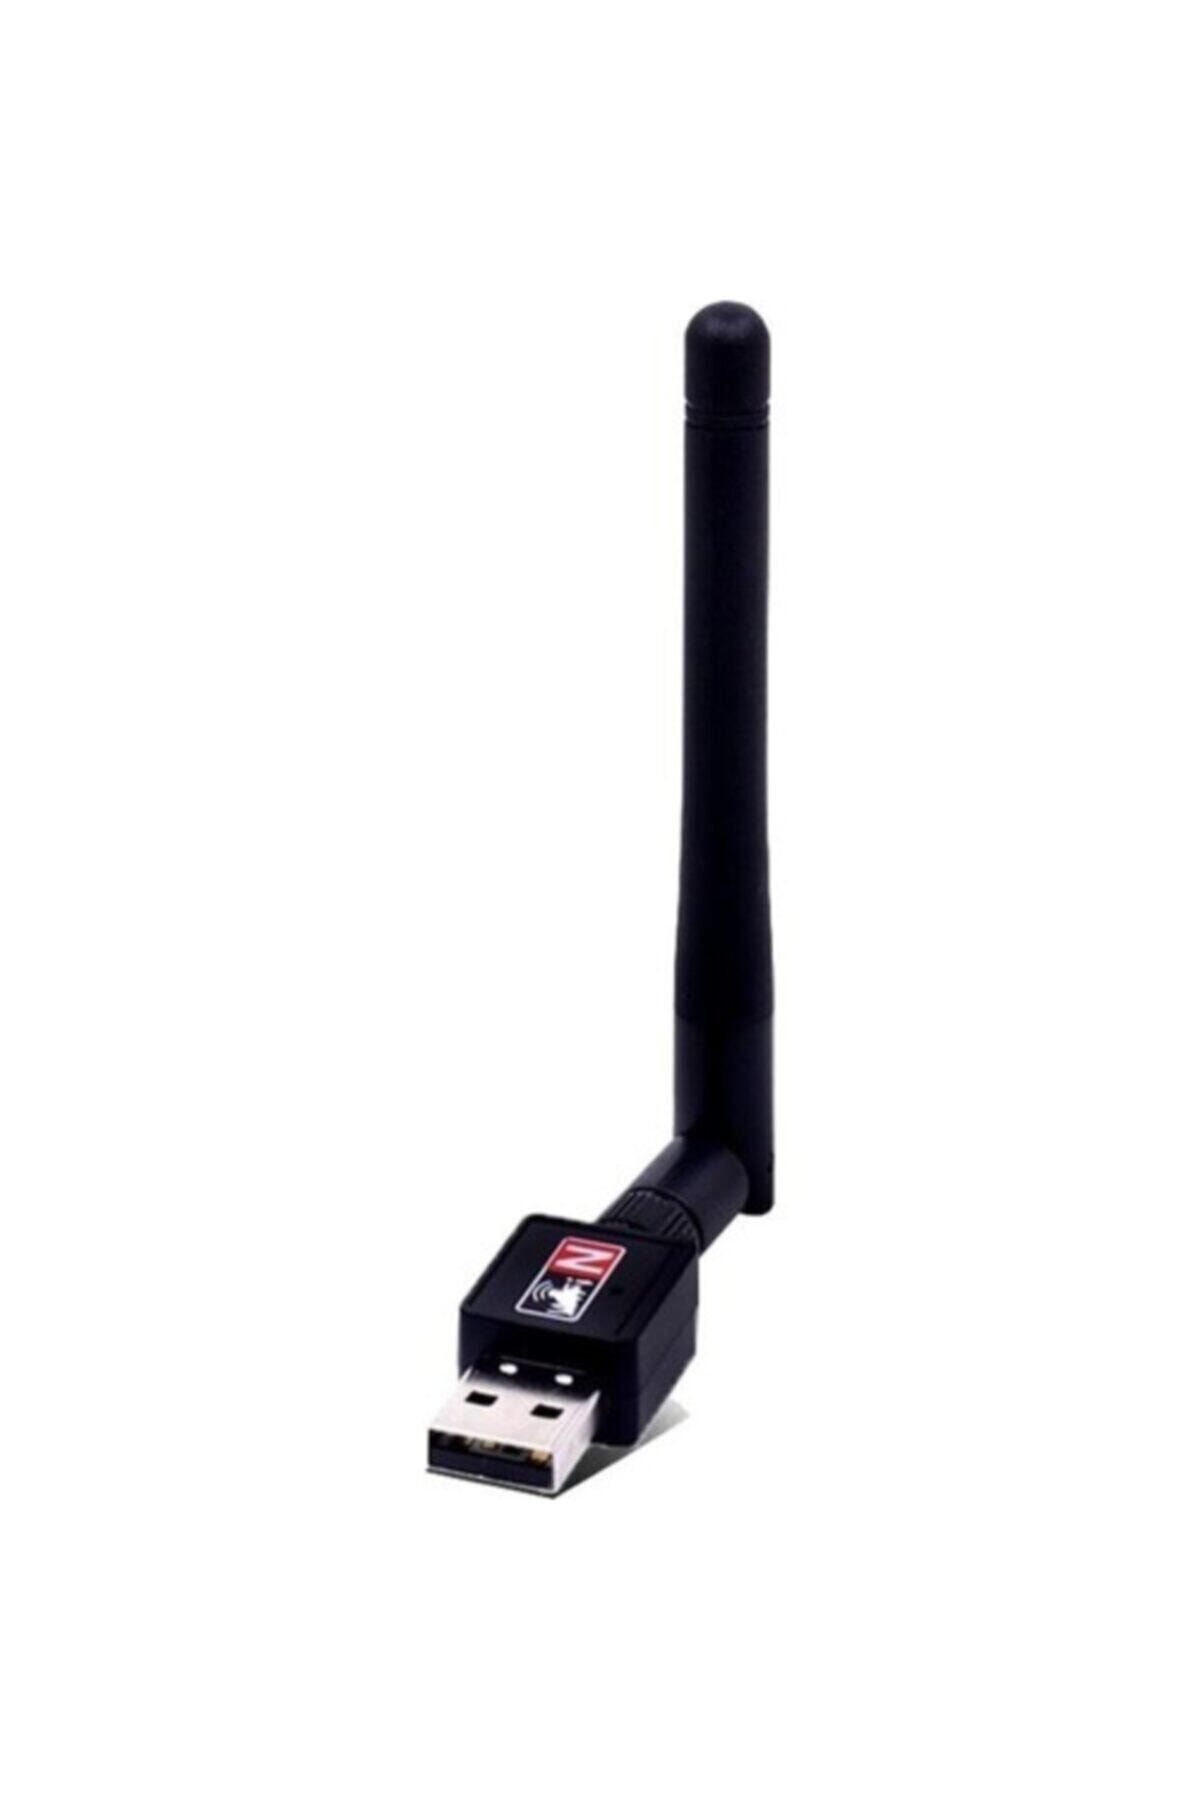 Blueway Wıreless 600 Mbps Antenli Kablosuz Ağ Pc Usb Wifi Alıcı